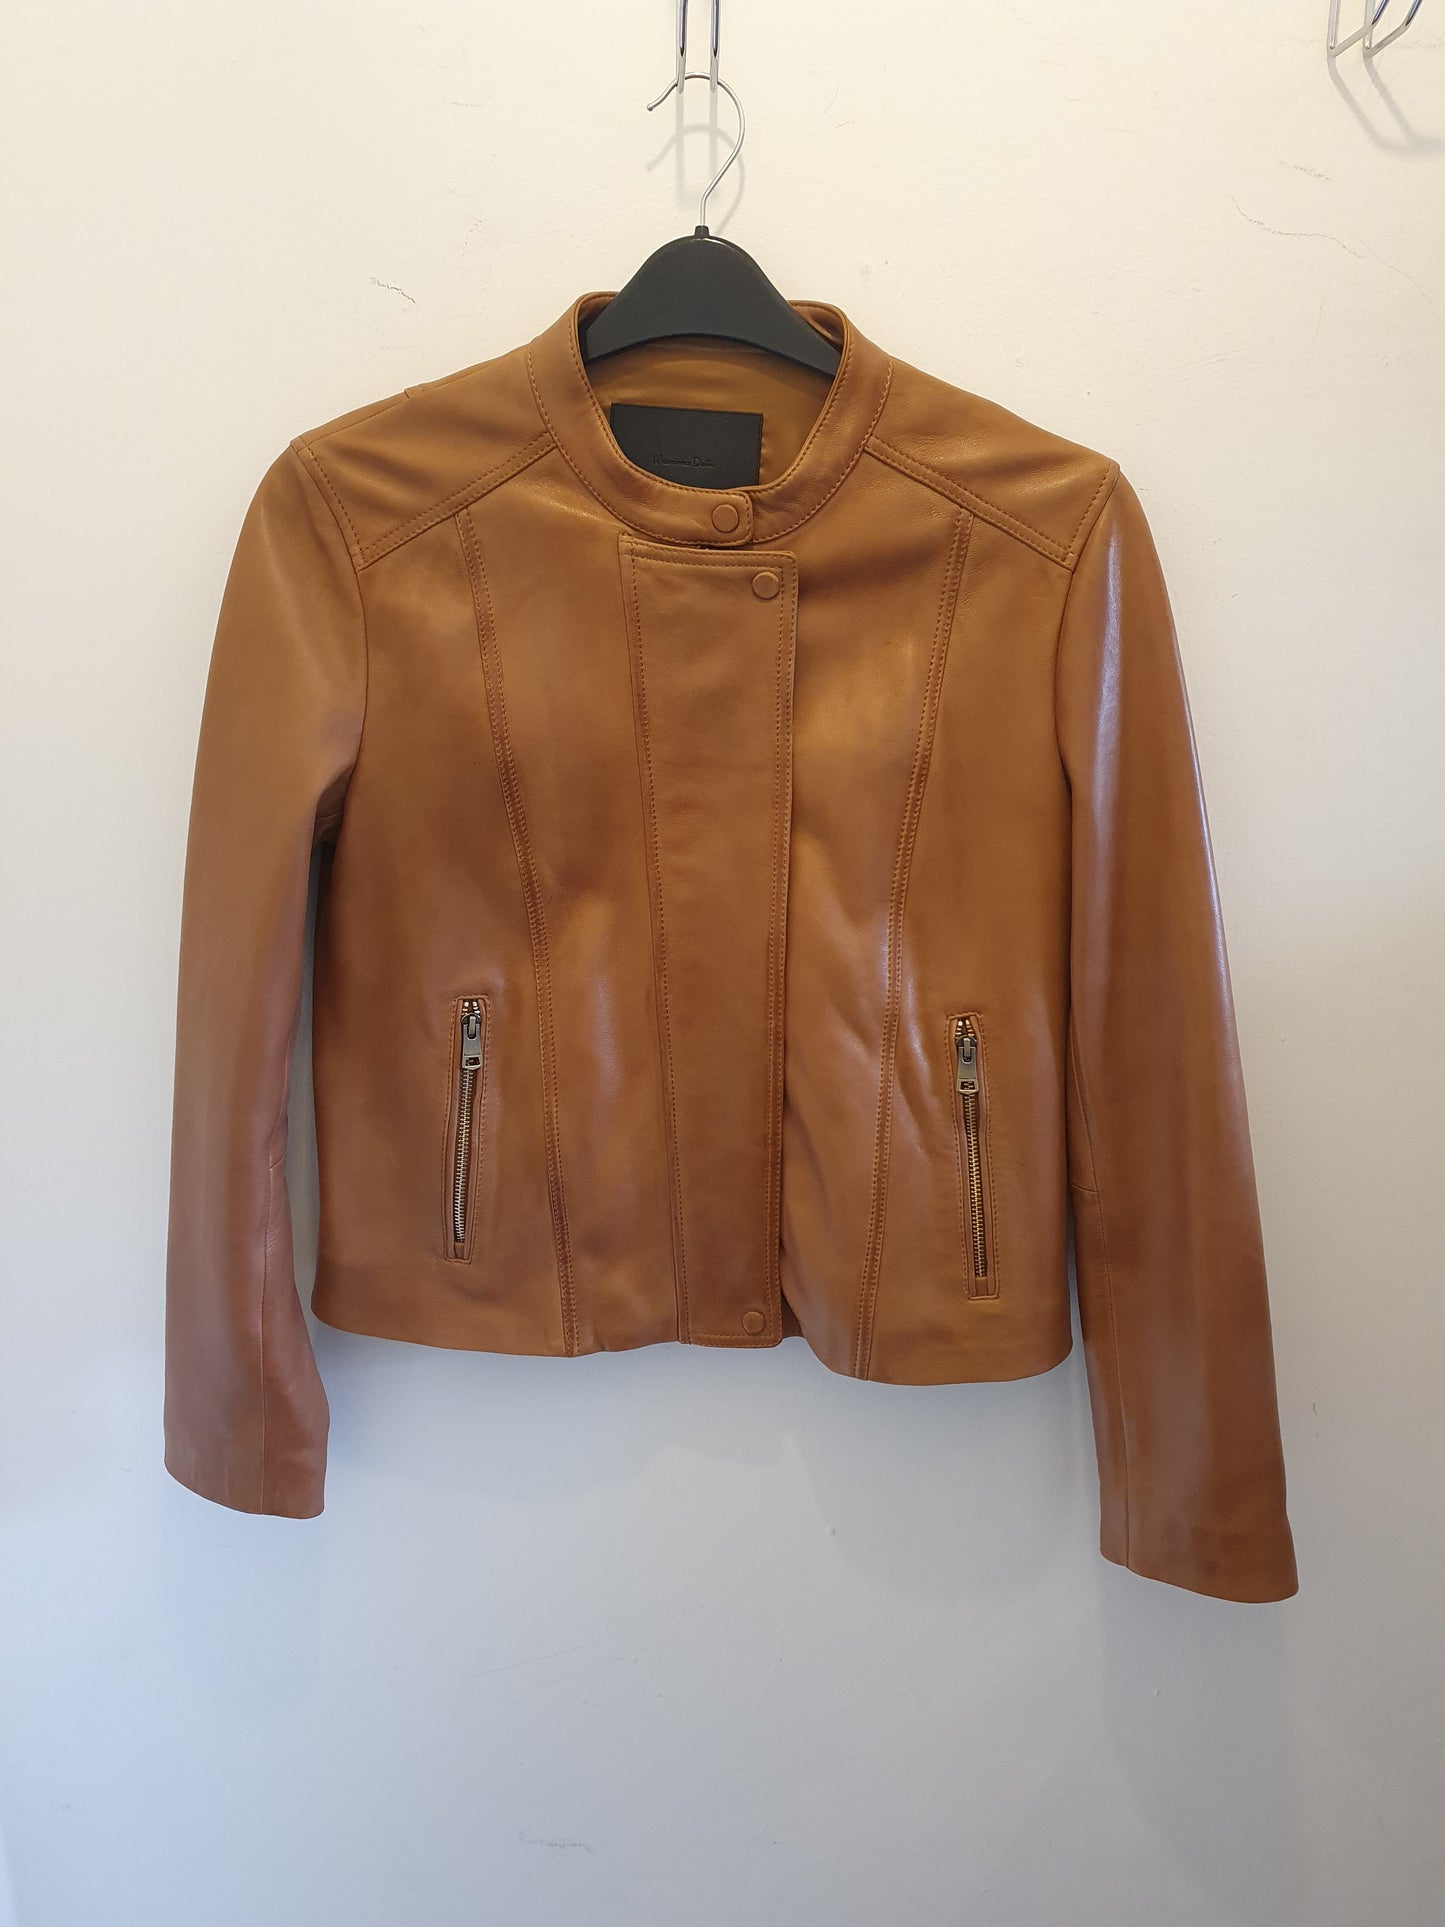 Massimo Dutti, Tan Leather Jacket, Size M/UK 12